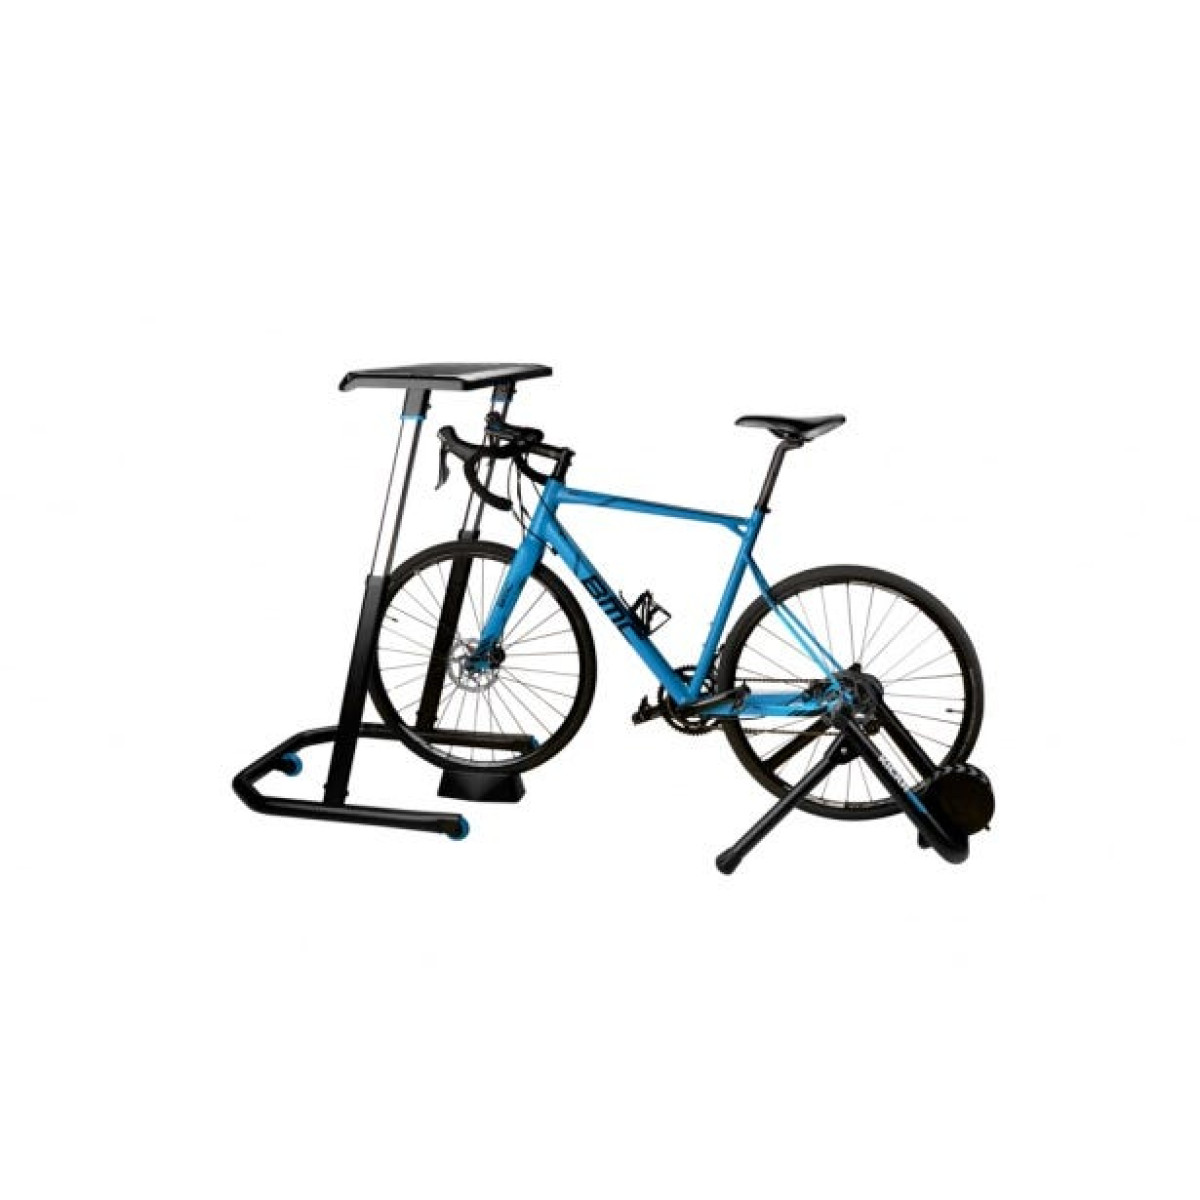 Wahoo KICKR ROLLR: This Hybrid Roller/Trainer for Indoor Biking